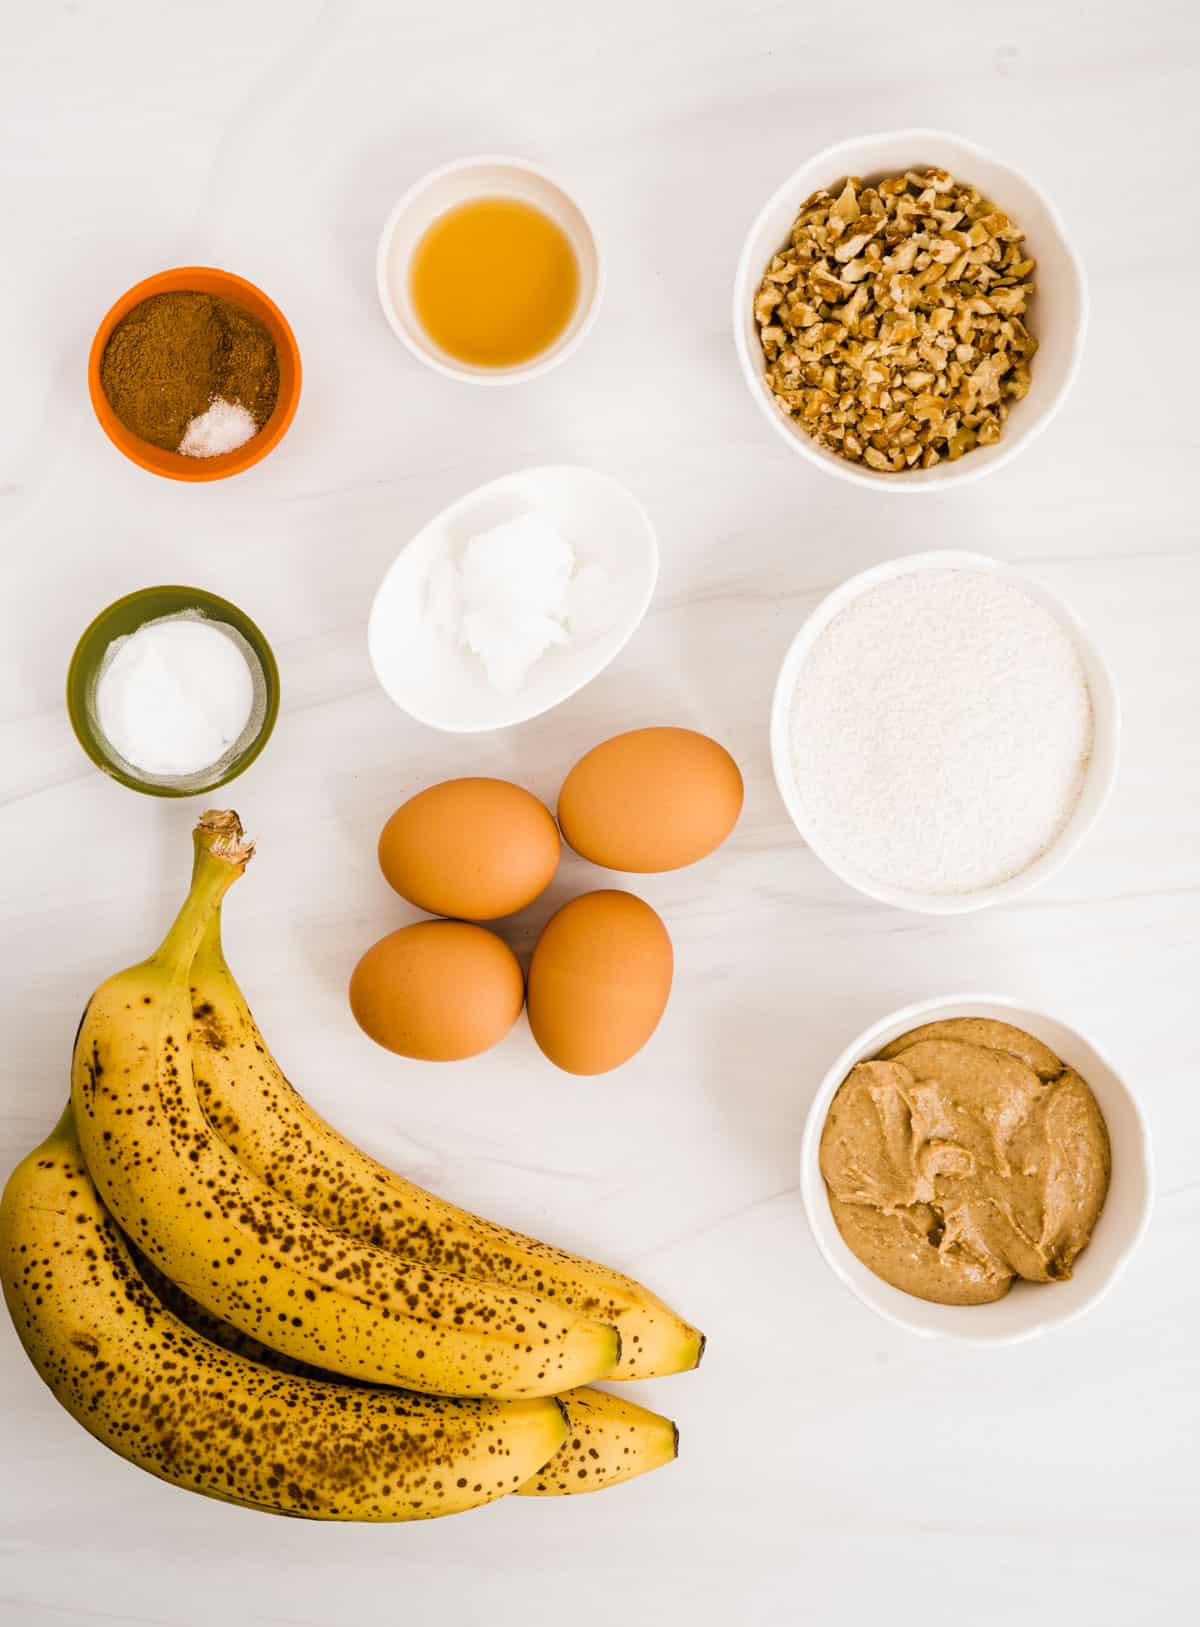 Ingredients for Paleo banana bread